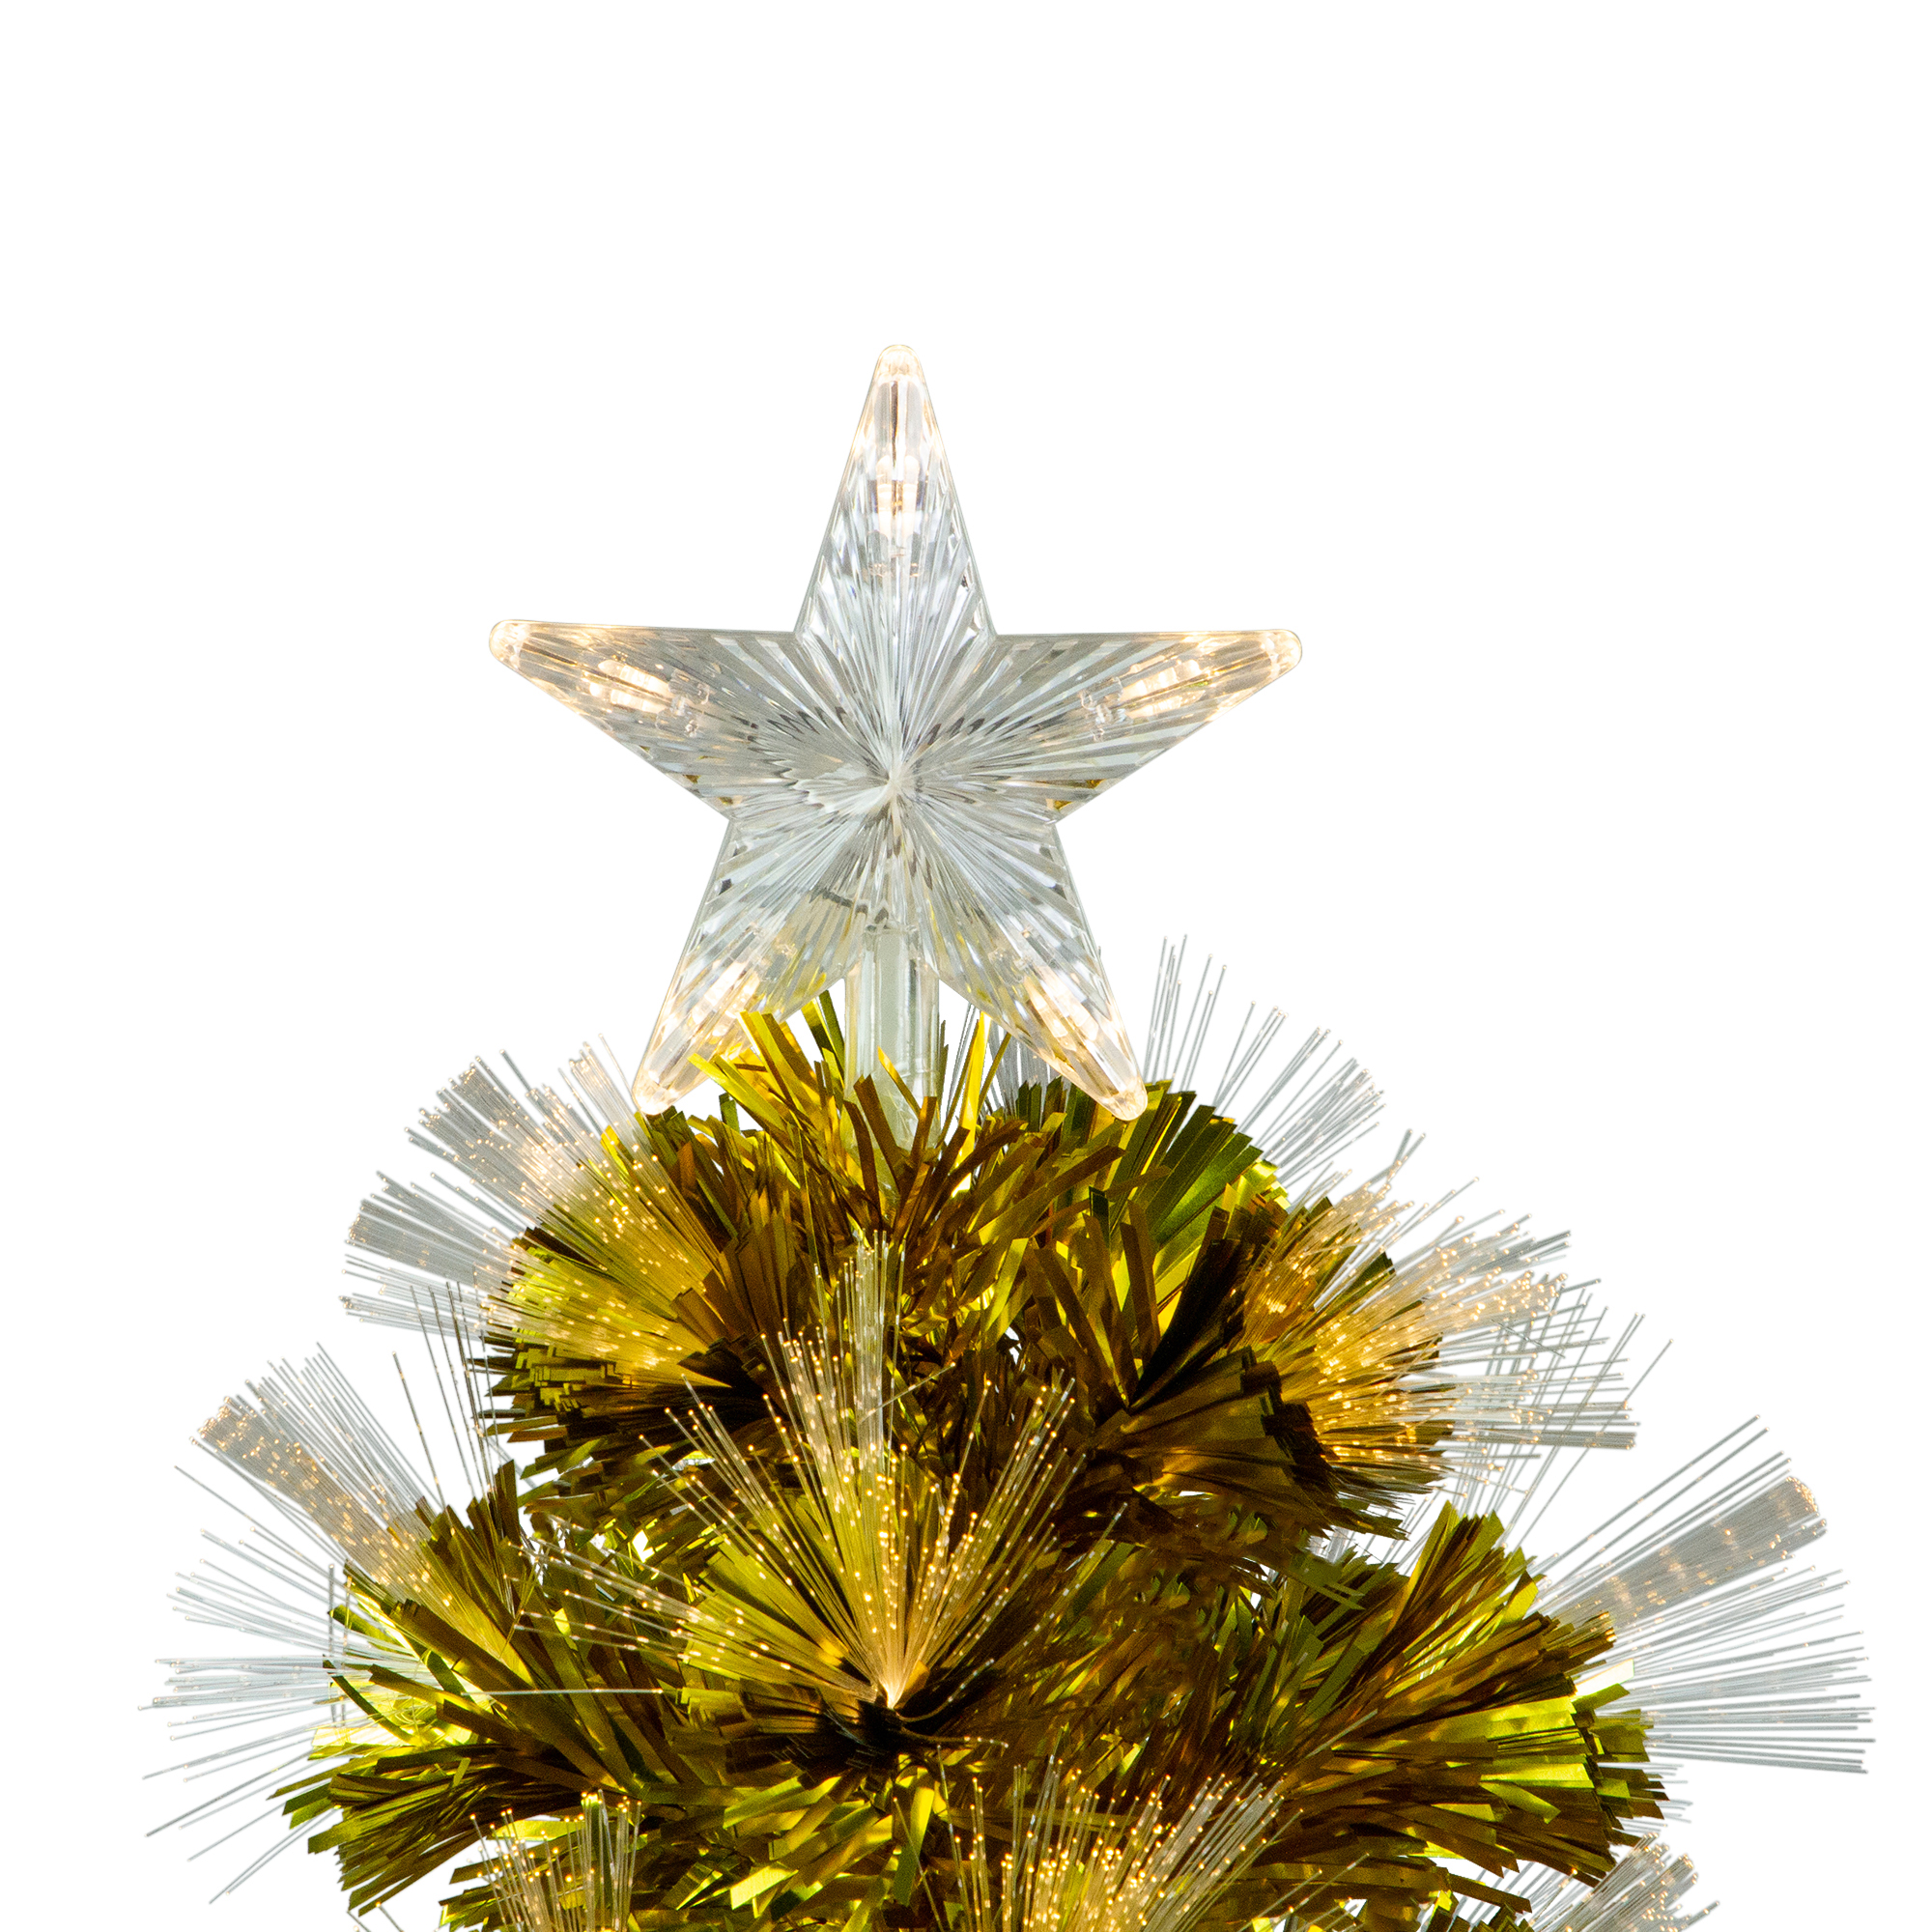 Northlight 3' Pre-Lit Gold Fiber Optic Artificial Christmas Tree, White Lights